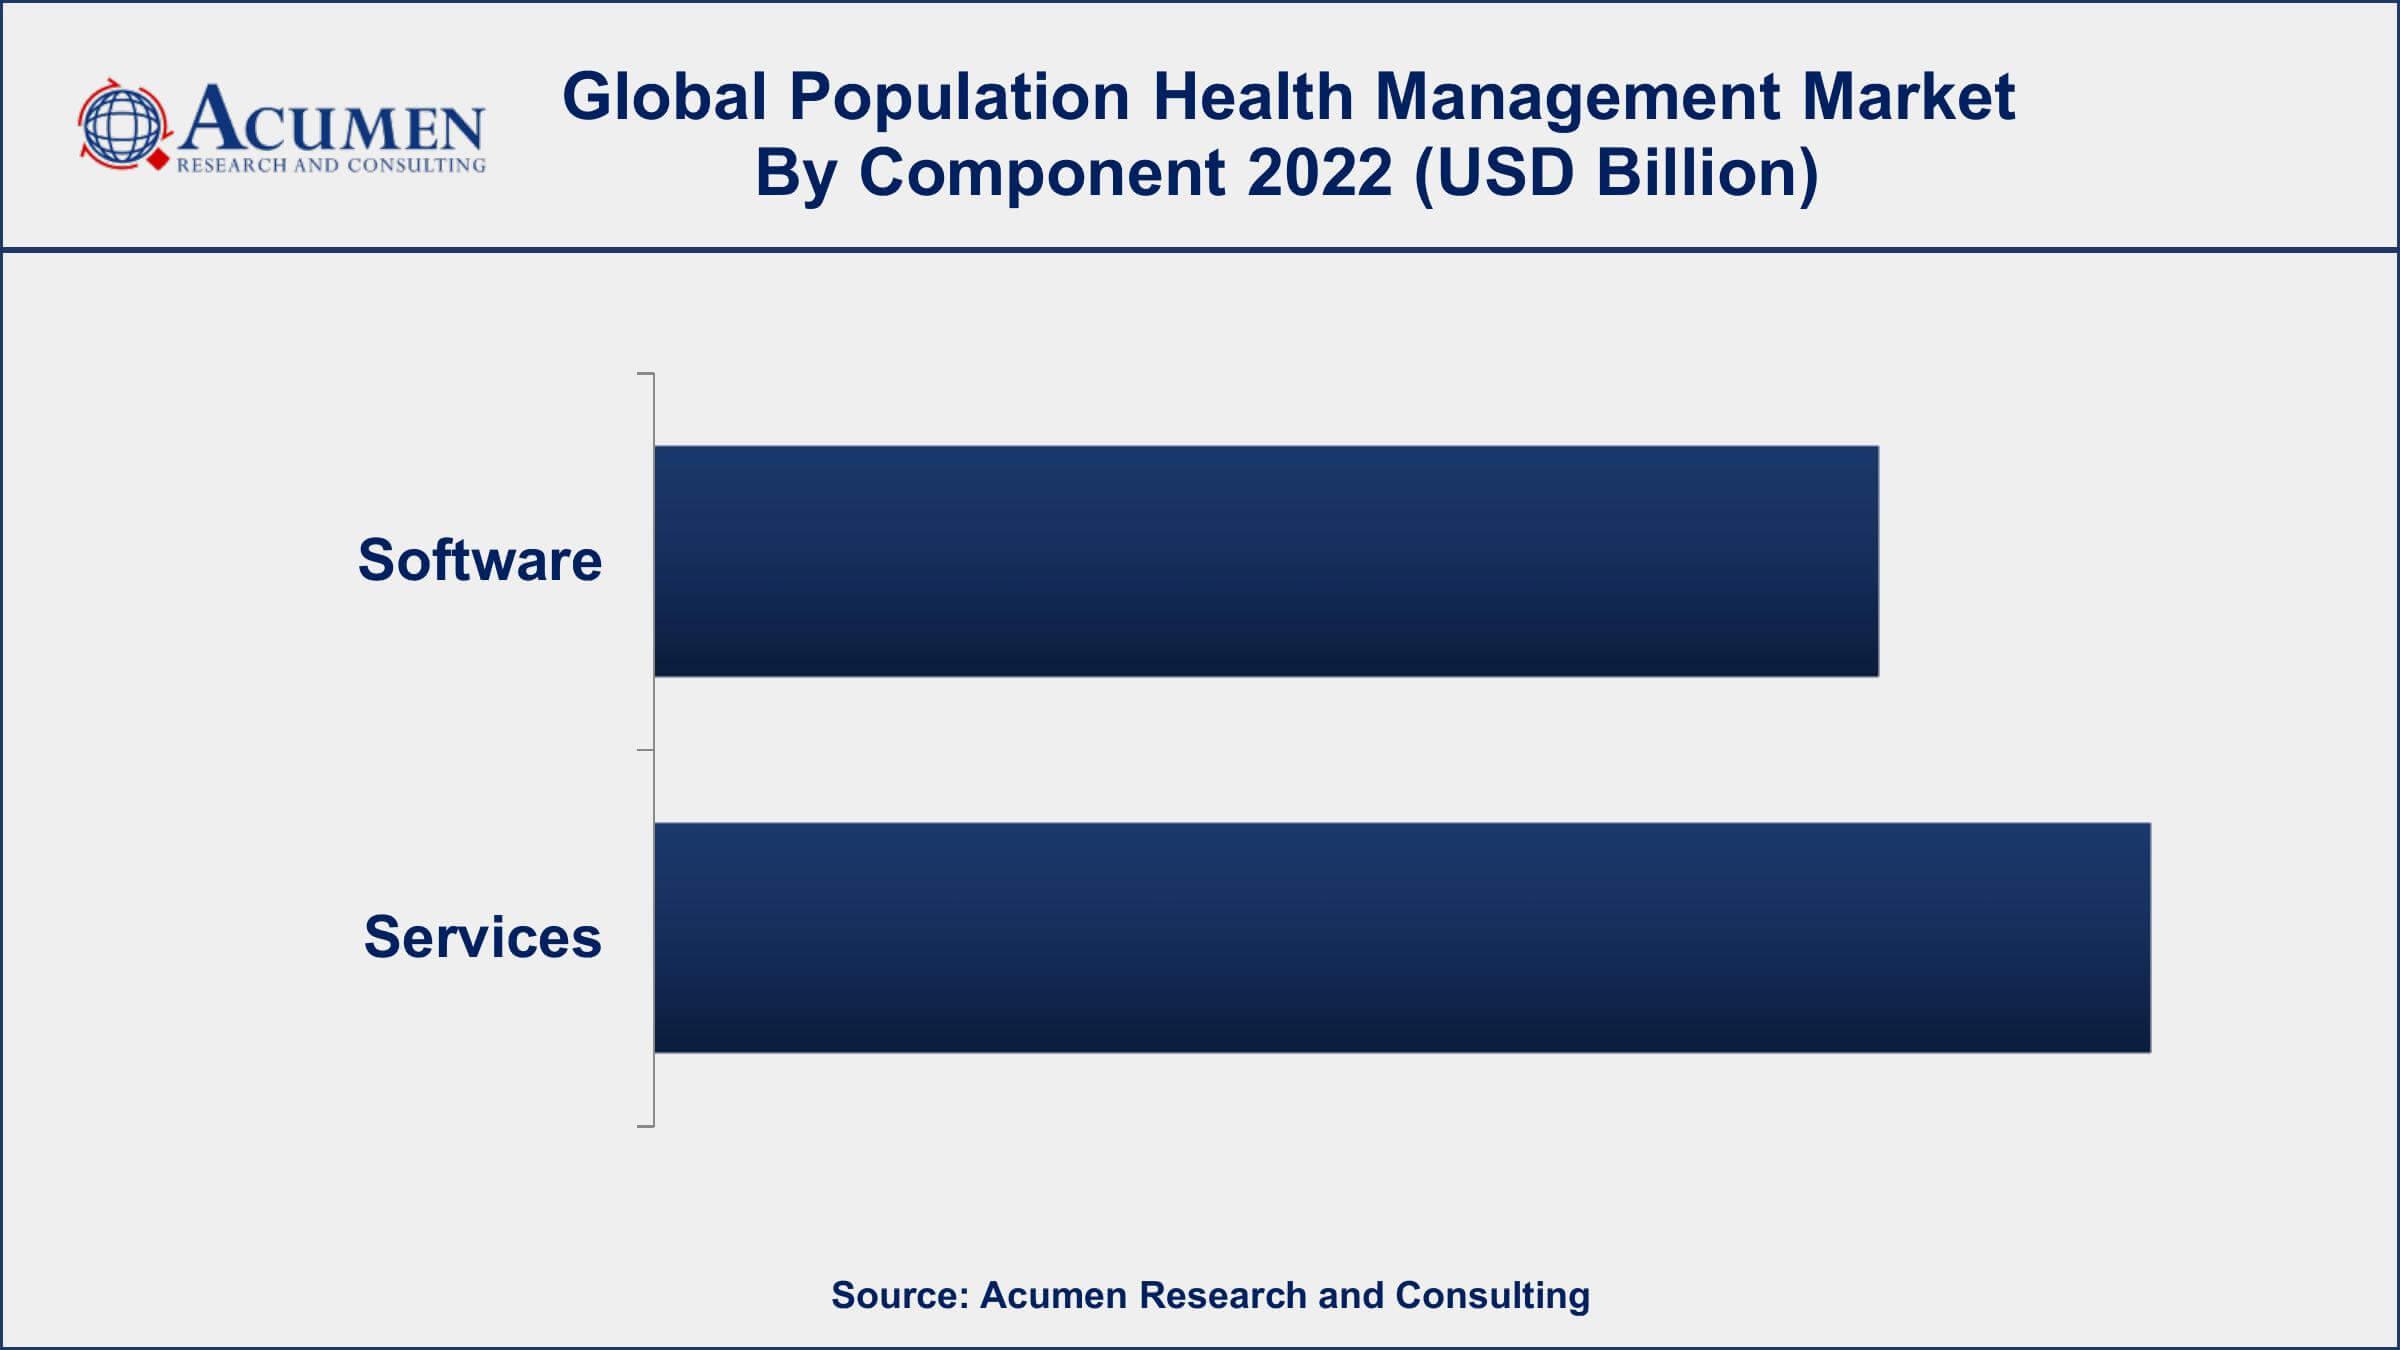 Population Health Management Market Drivers